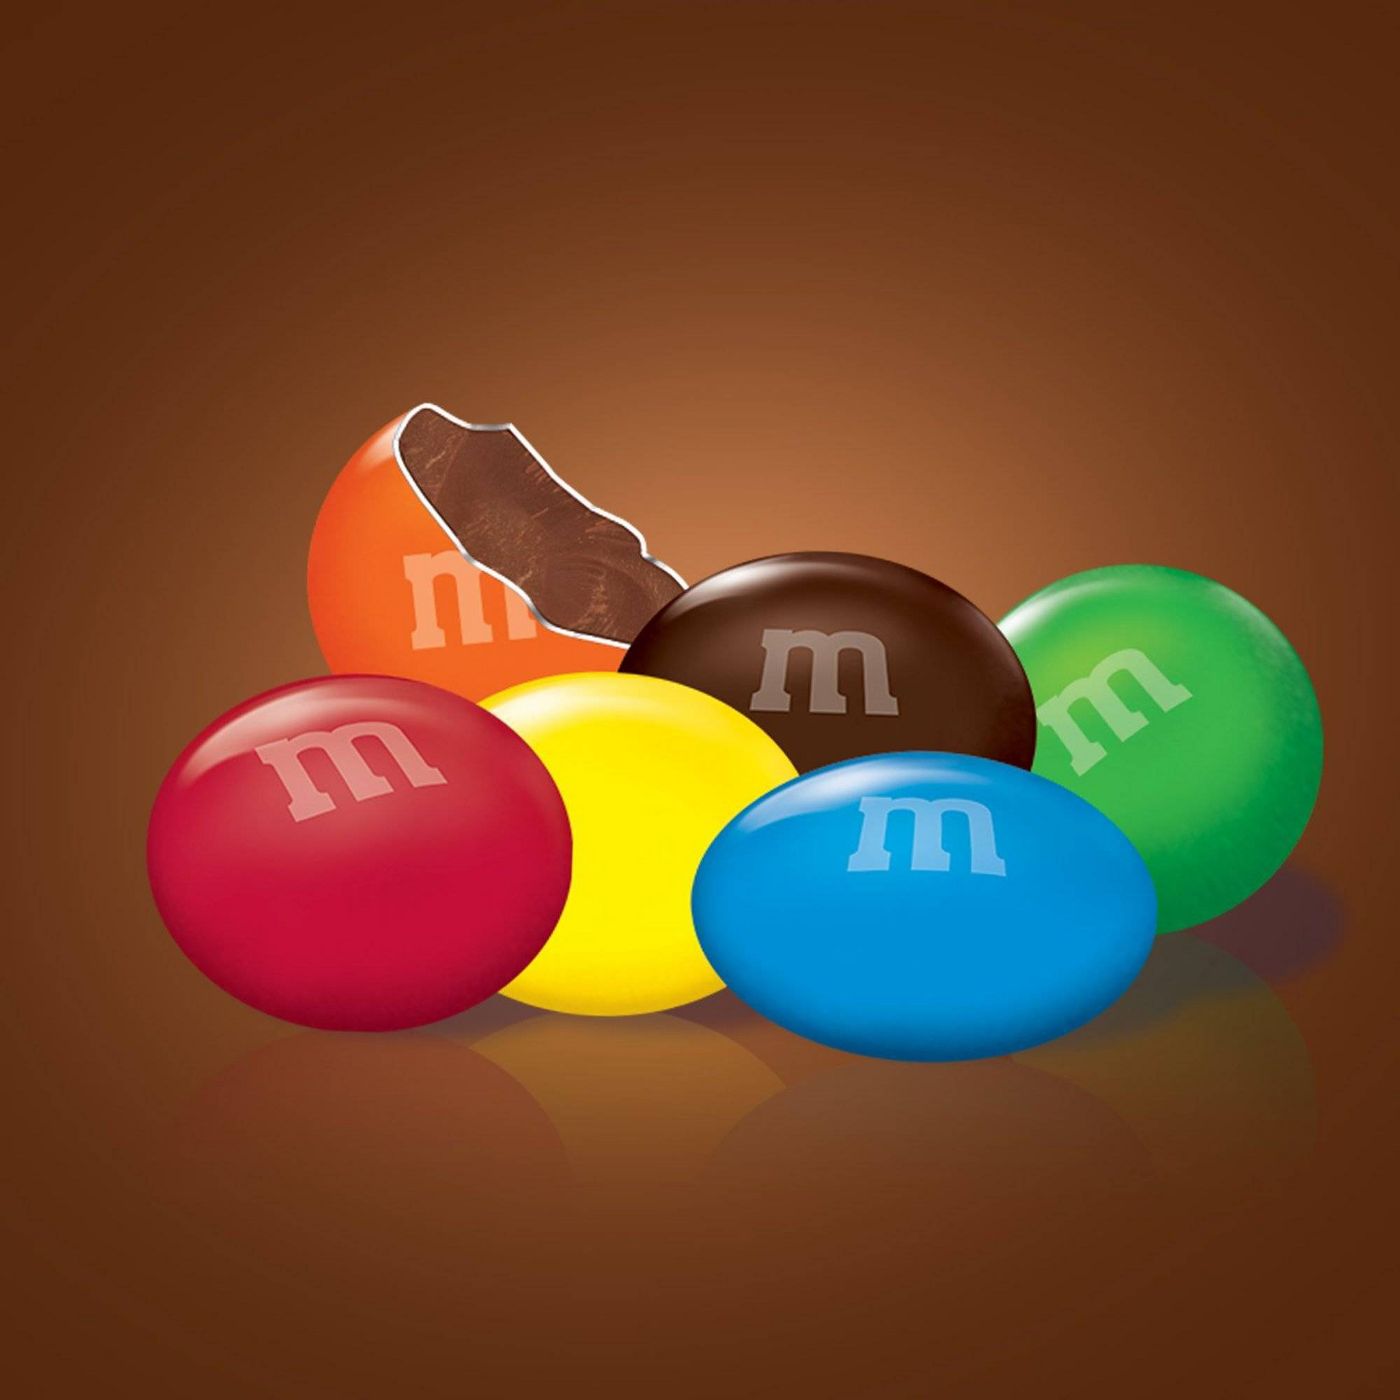 M&M's Peanut Milk Chocolate Candy, Family Size 19.2 oz